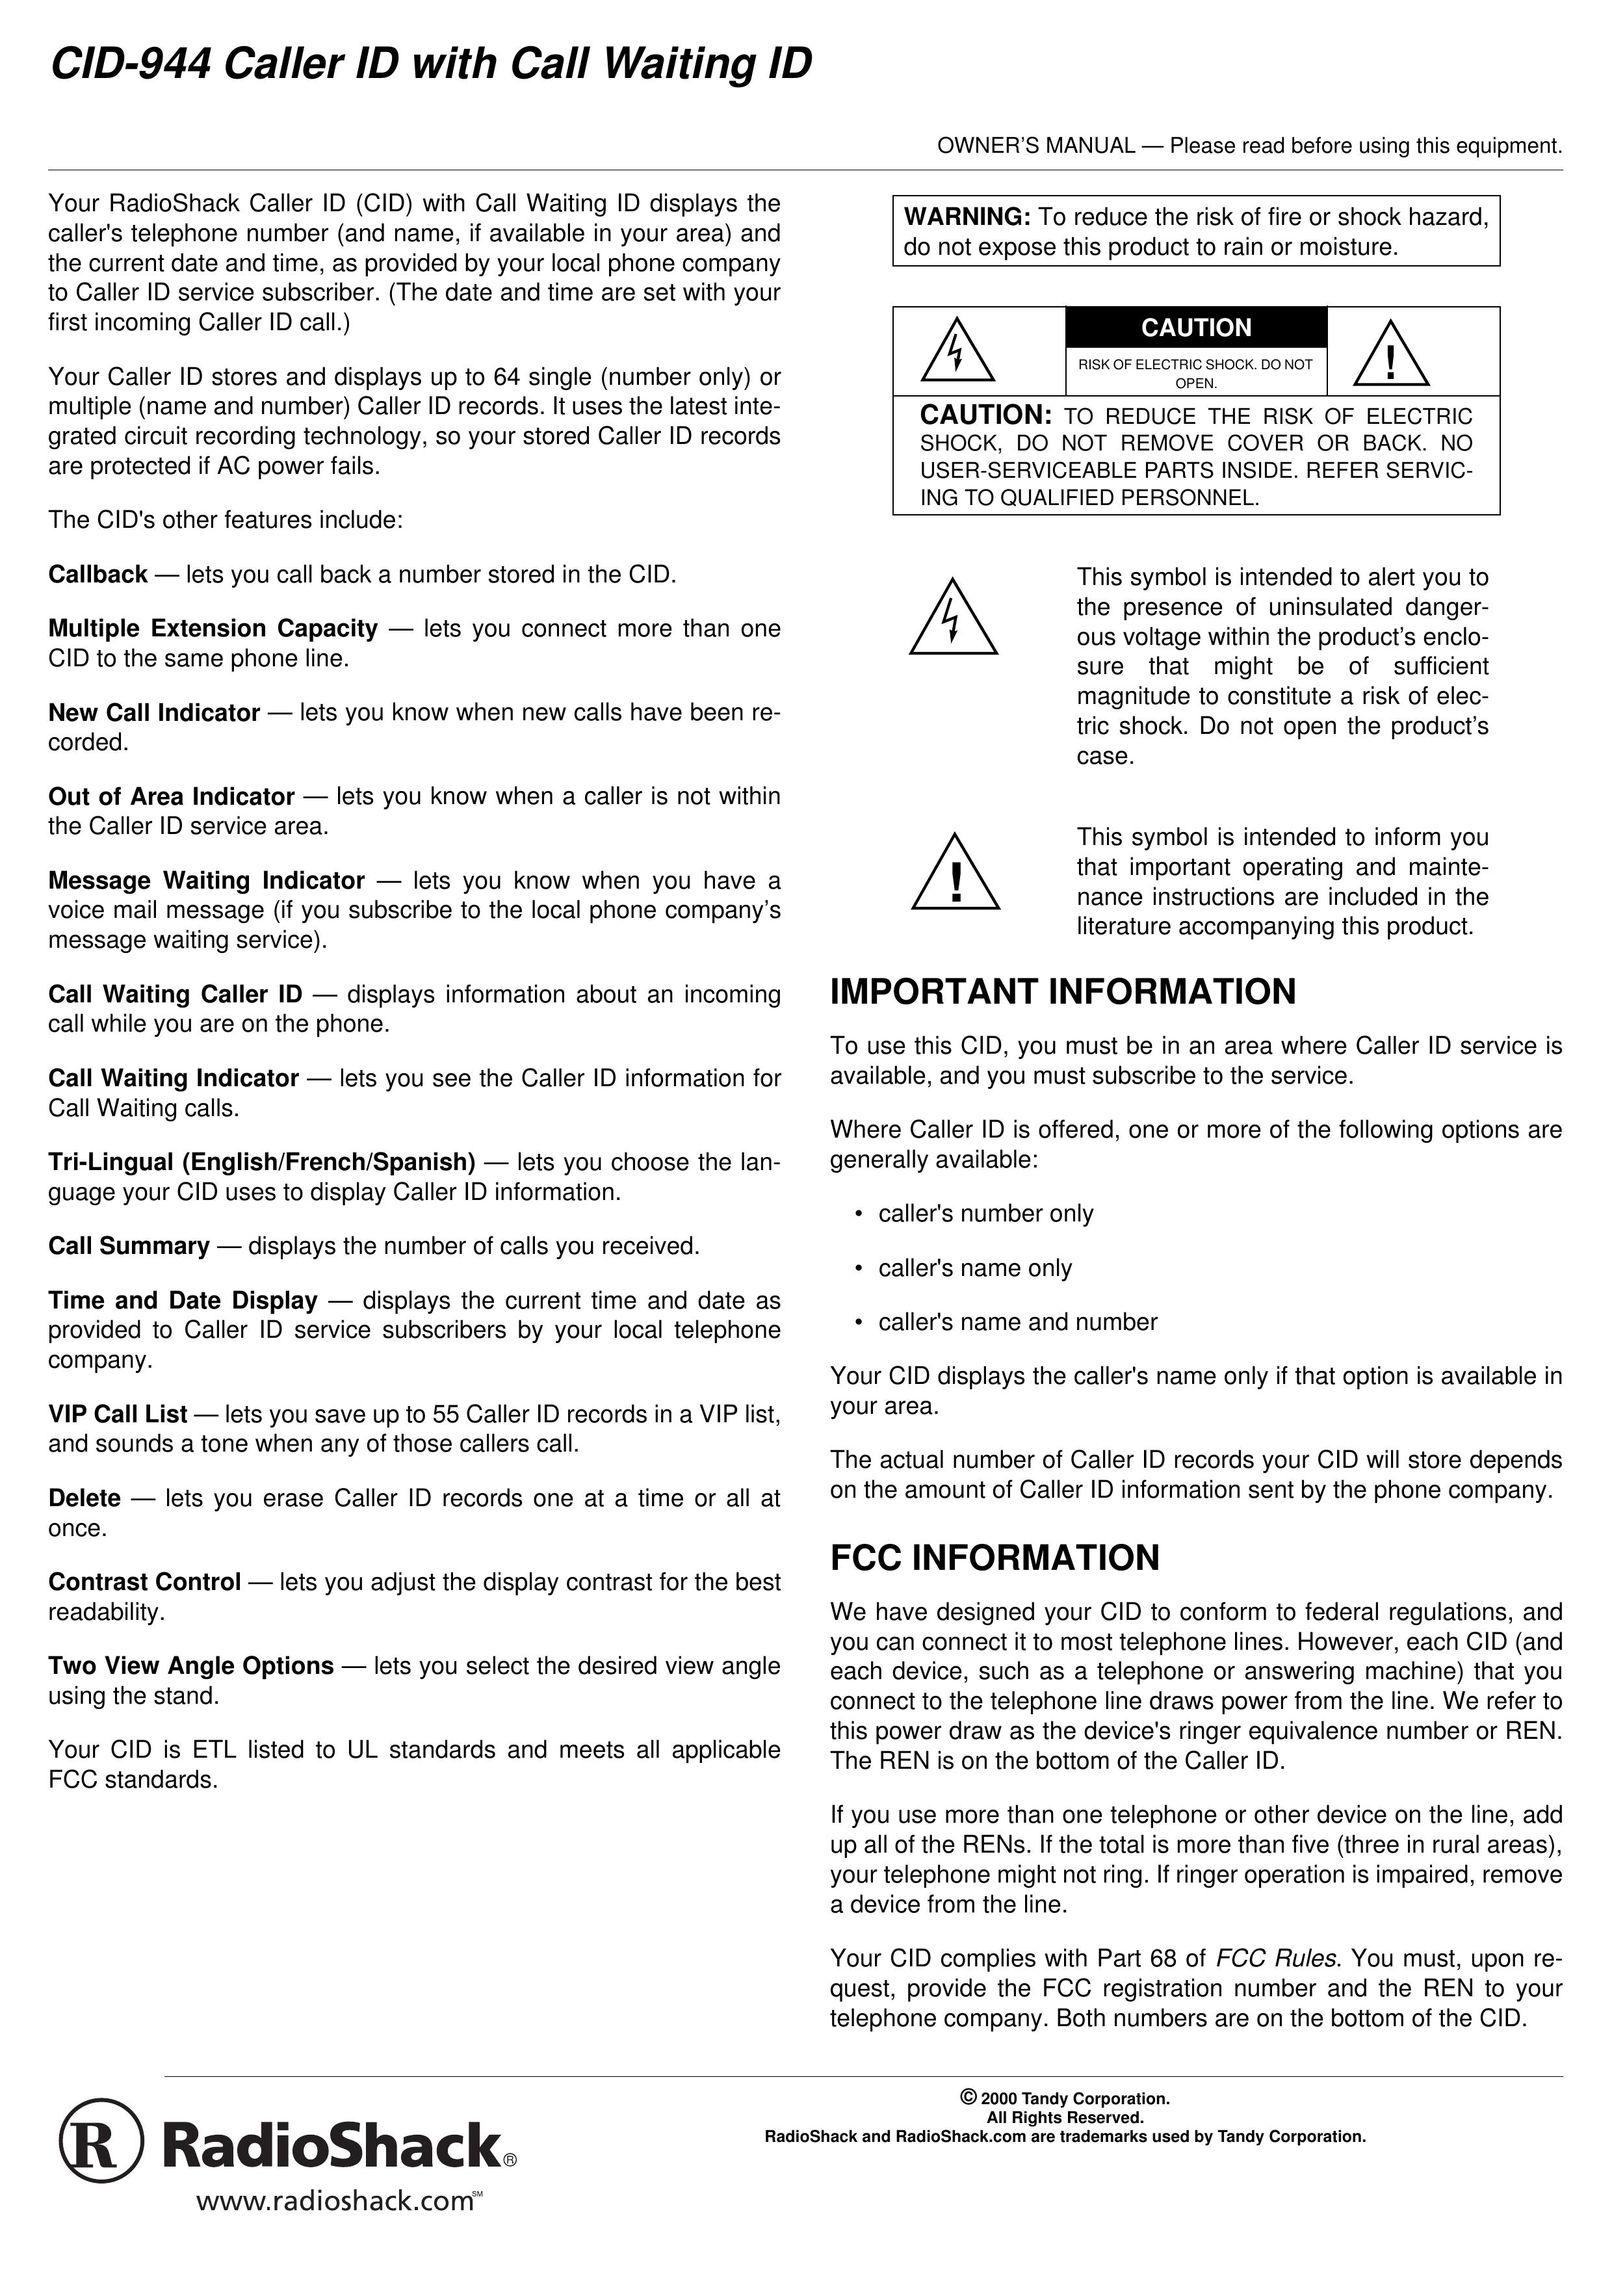 Radio Shack CID-944 Caller ID Box User Manual